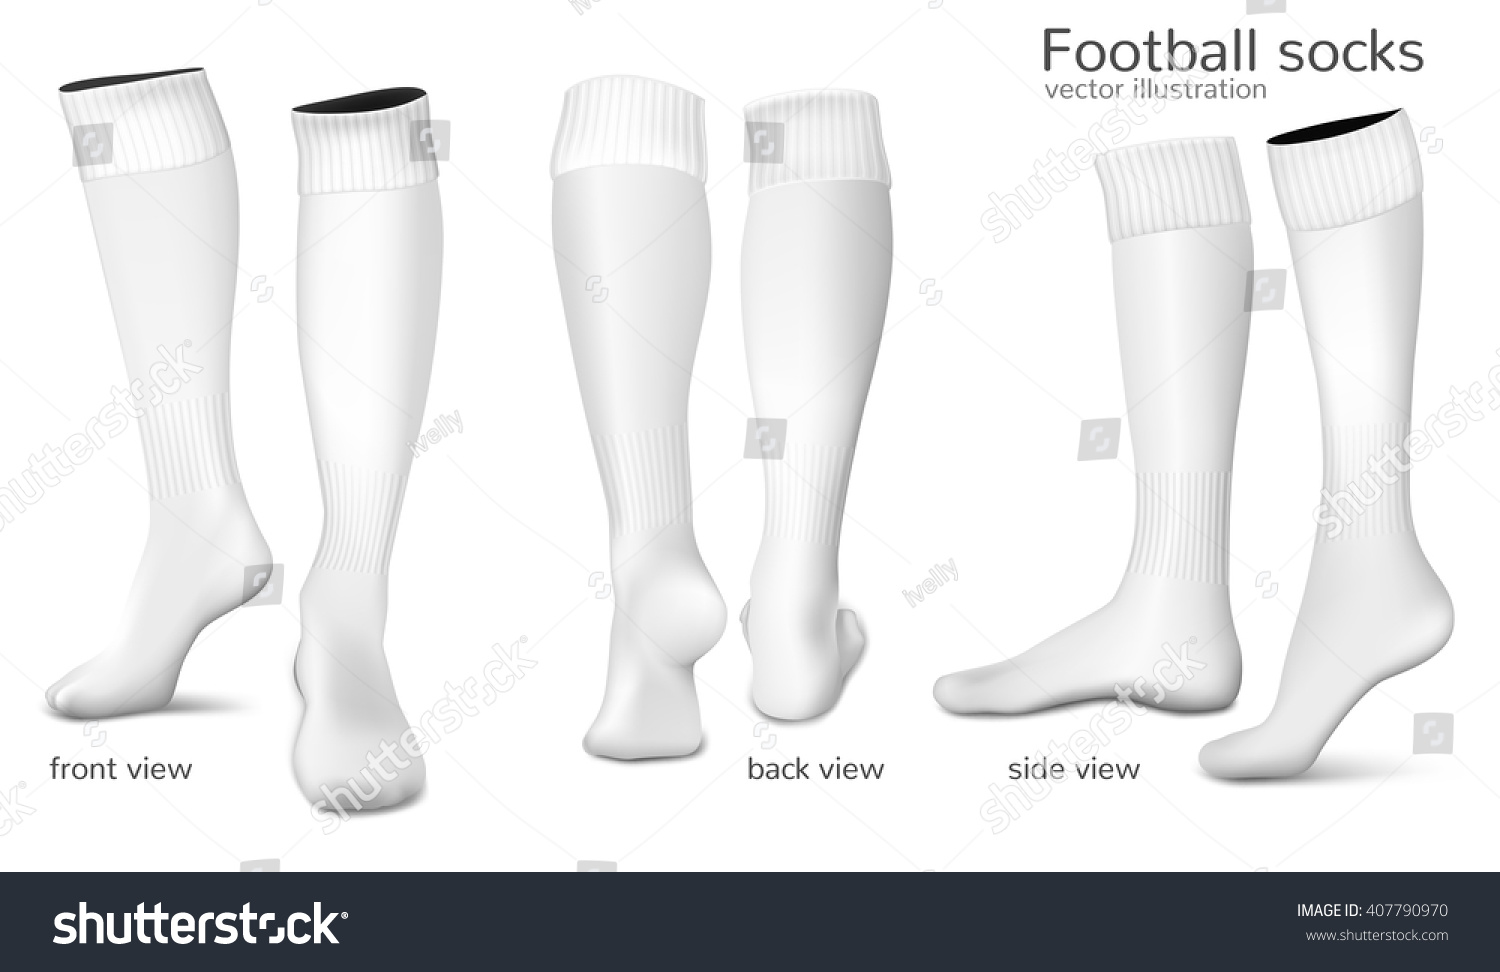 3,195 Soccer socks boy Images, Stock Photos & Vectors | Shutterstock